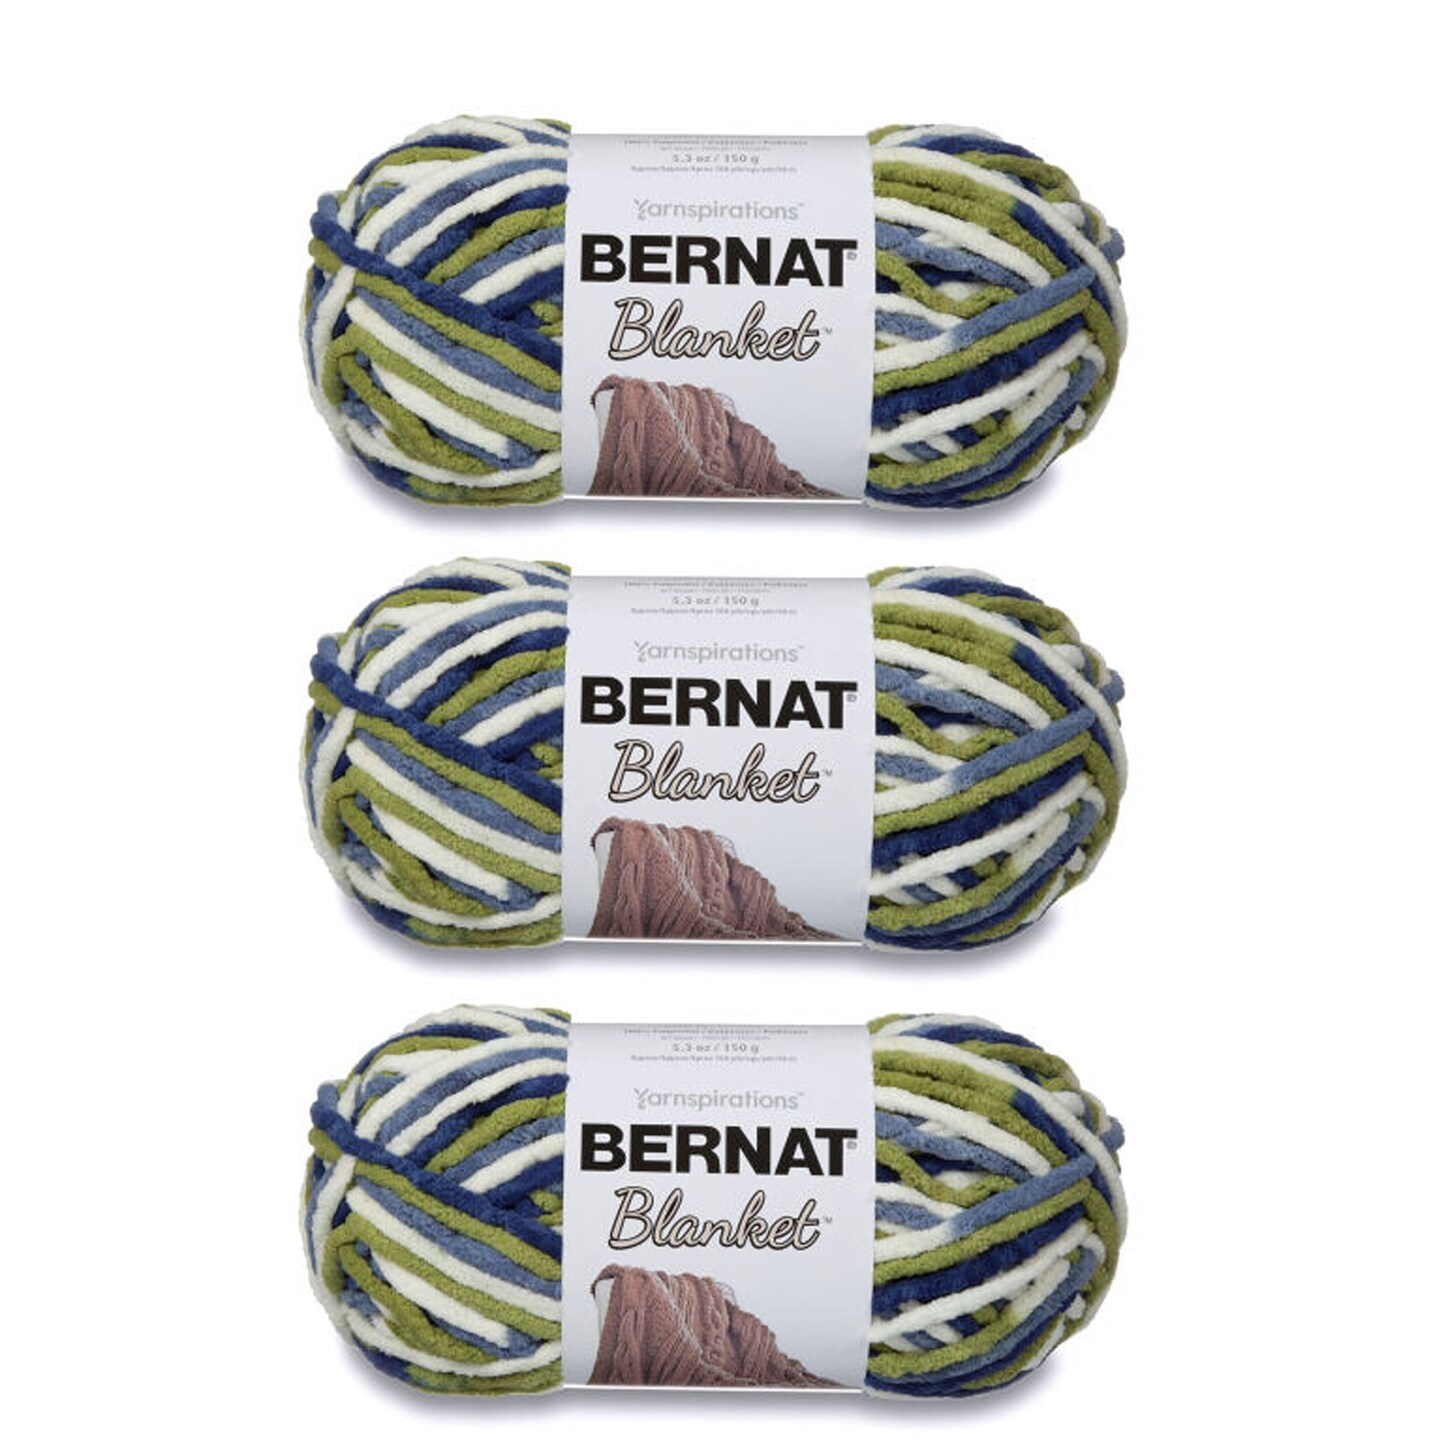 Bernat Blanket Multipack of 6 Oceanside Yarn 